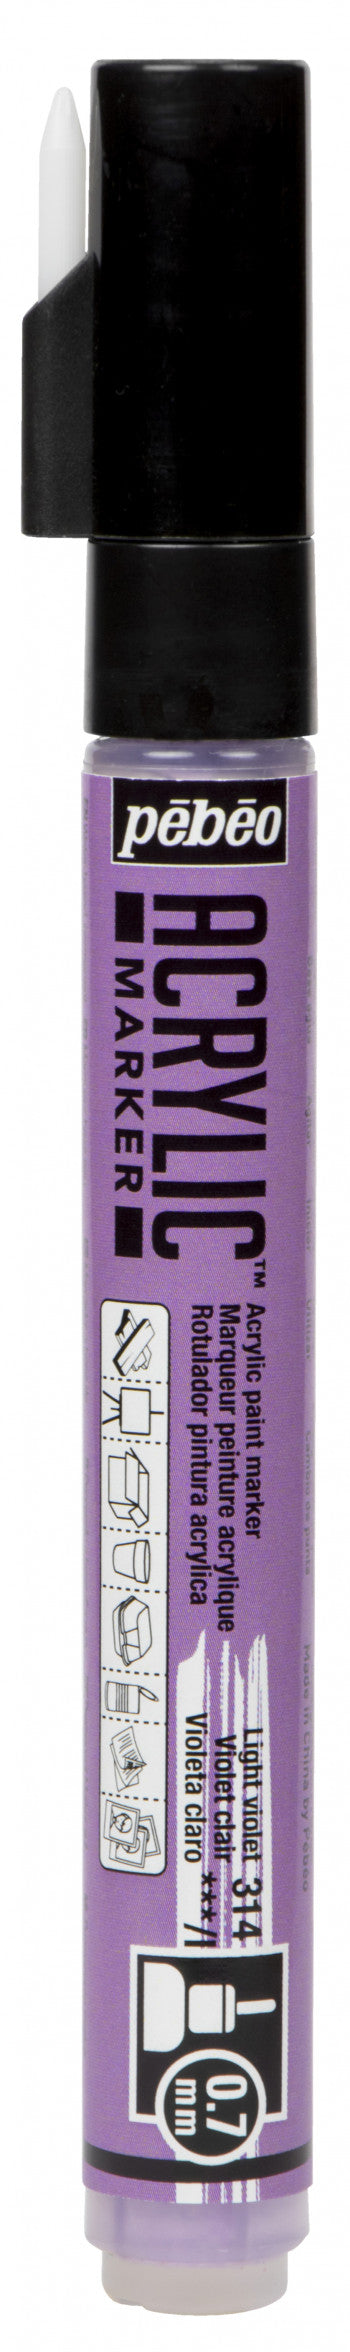 Acrylic Marker 0.7mm Pebeo Light purple